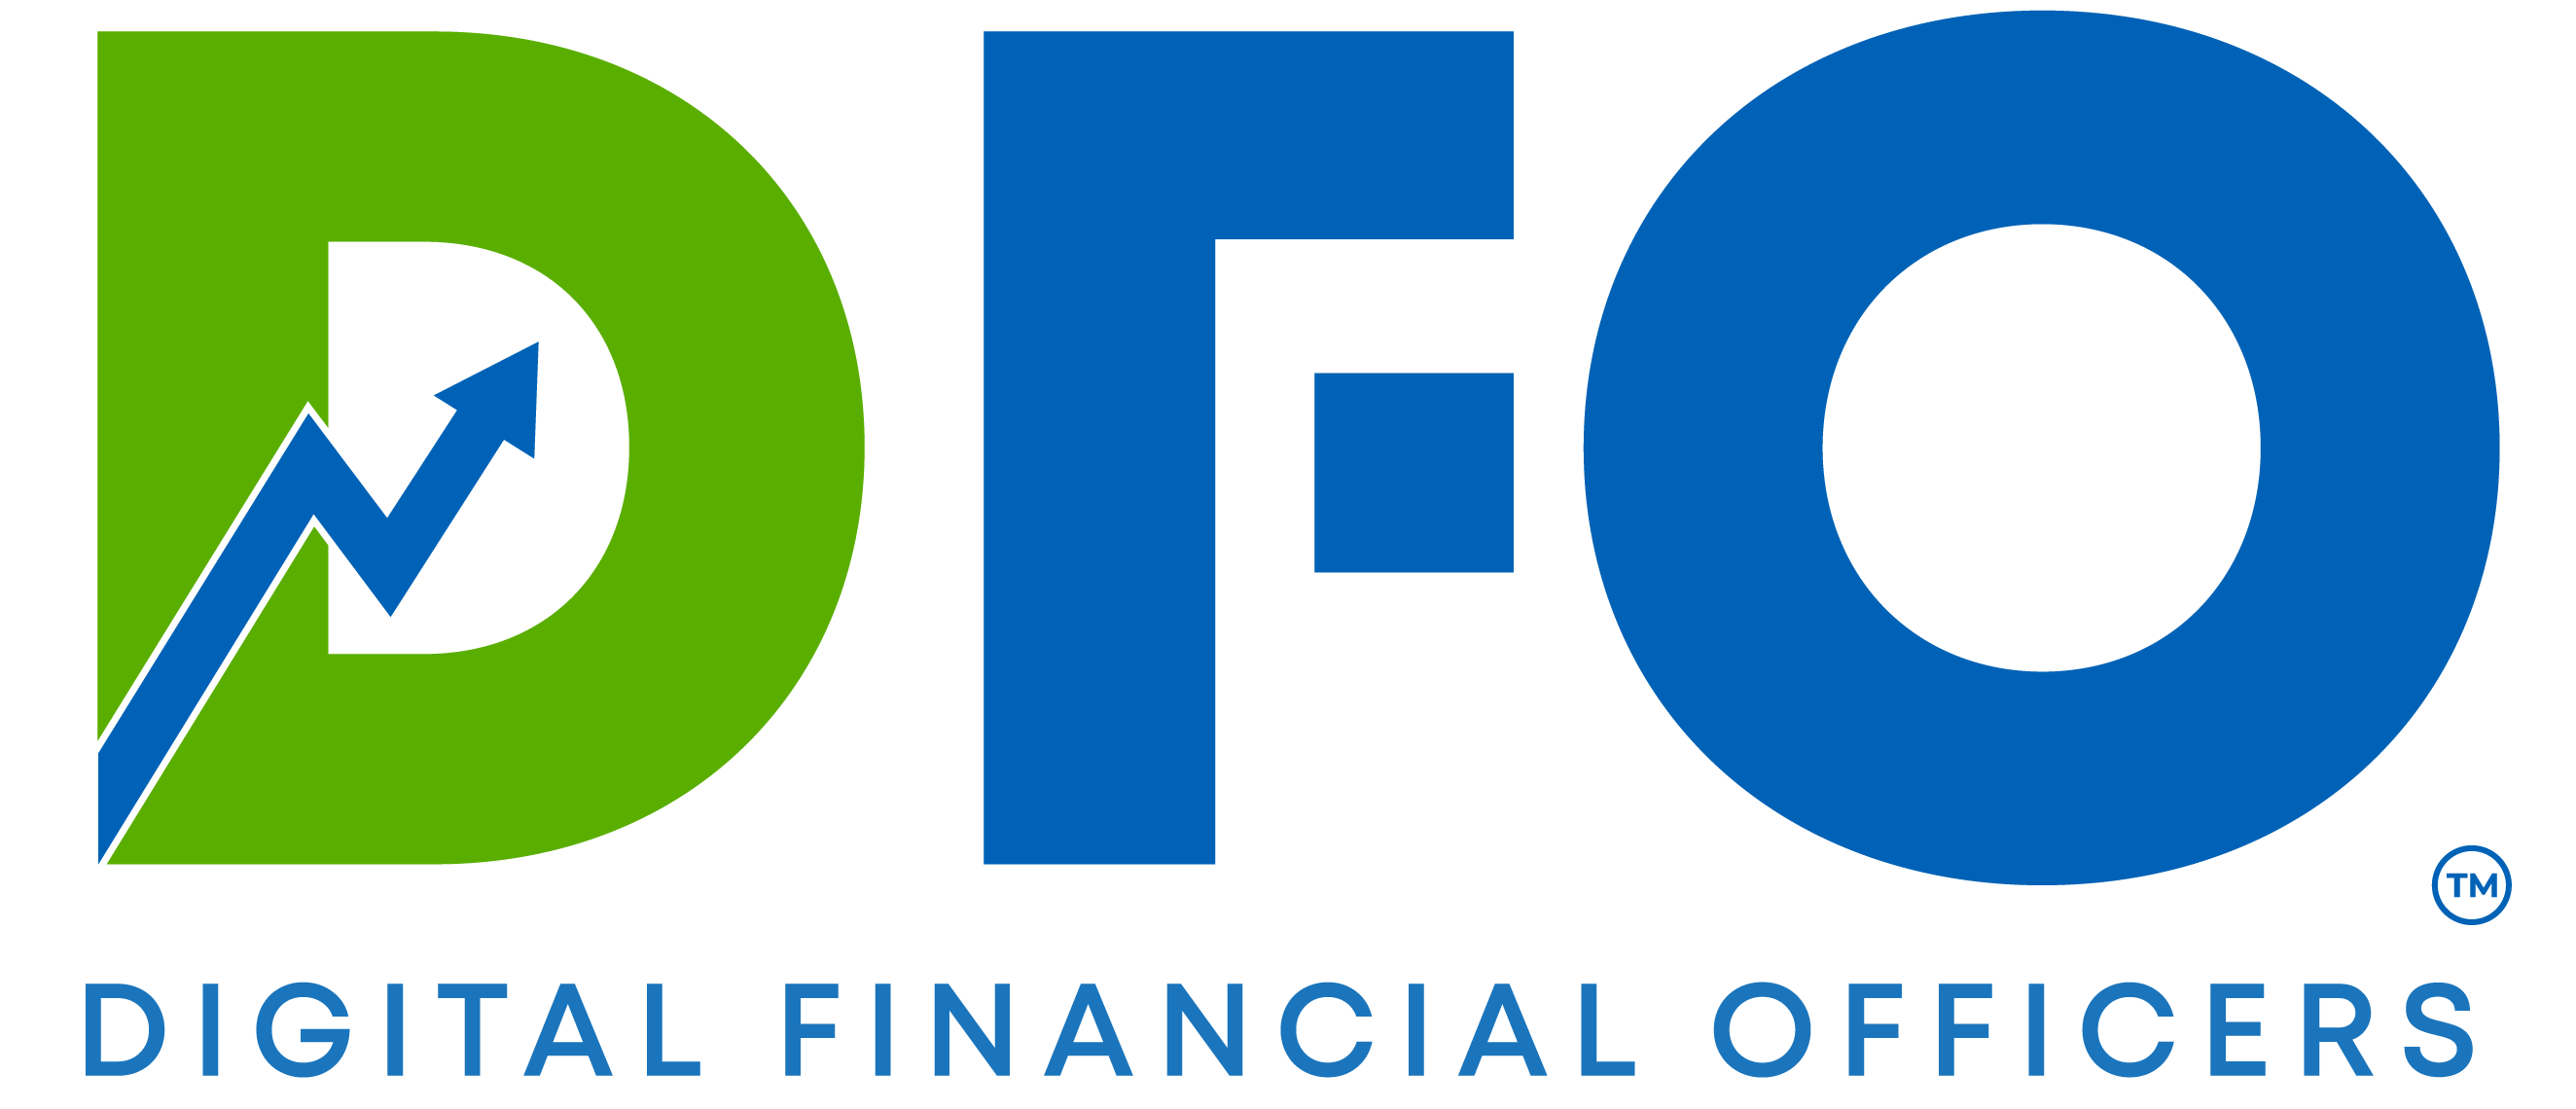 Digital Financial Officers